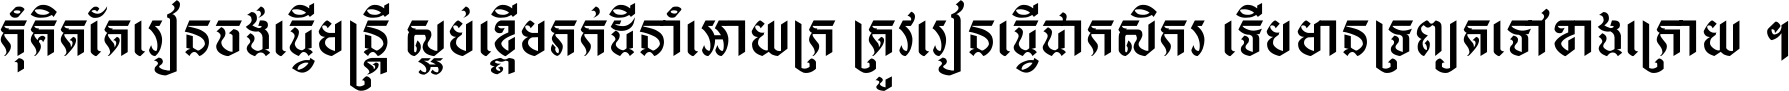 Khmer Pen Svayreing